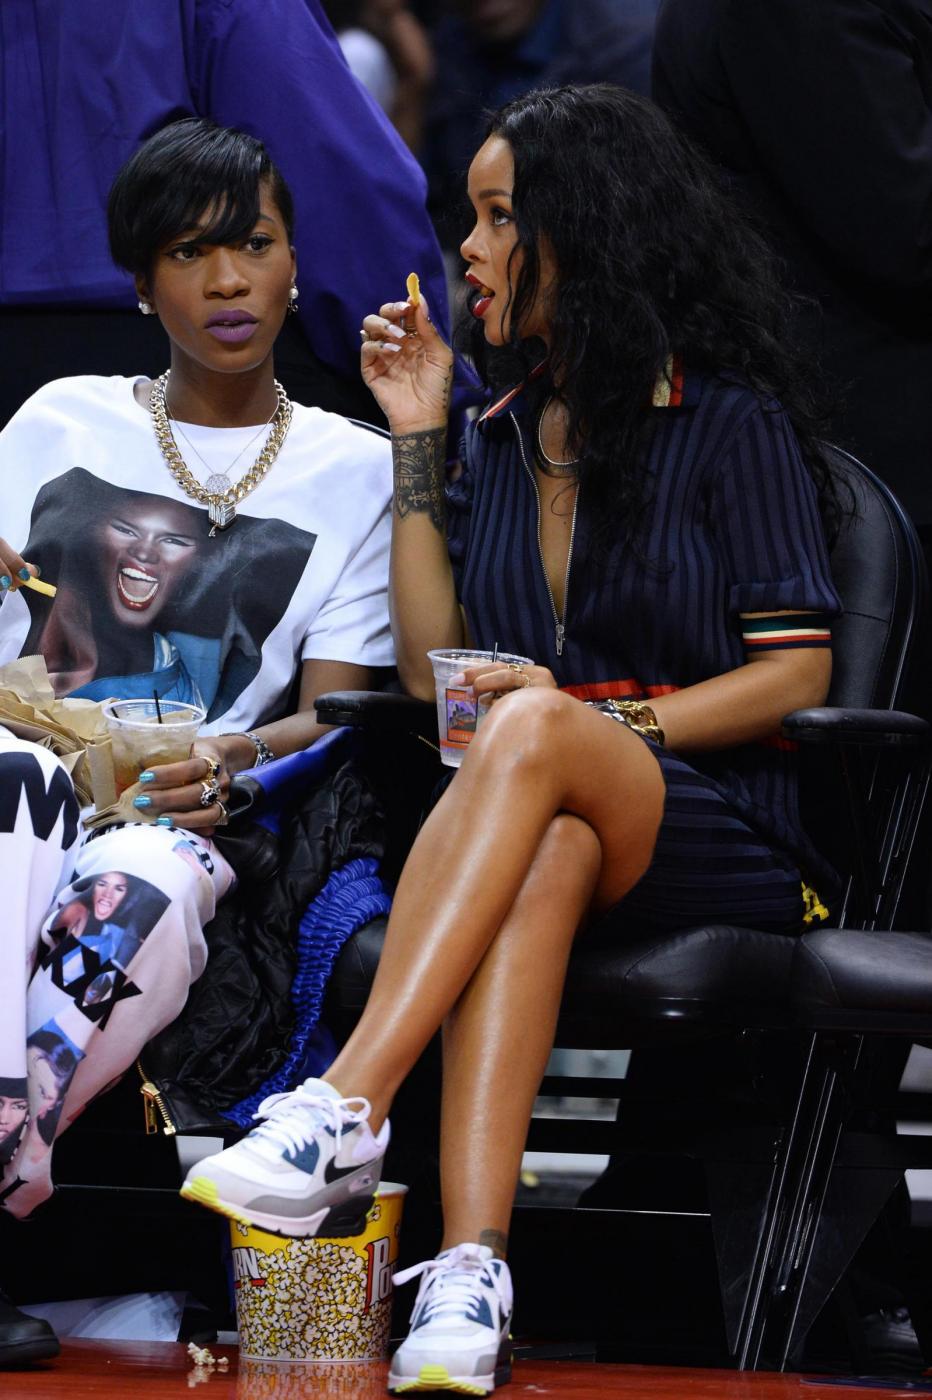 Rihanna, patatine fritte e risatine alla partita di basket08